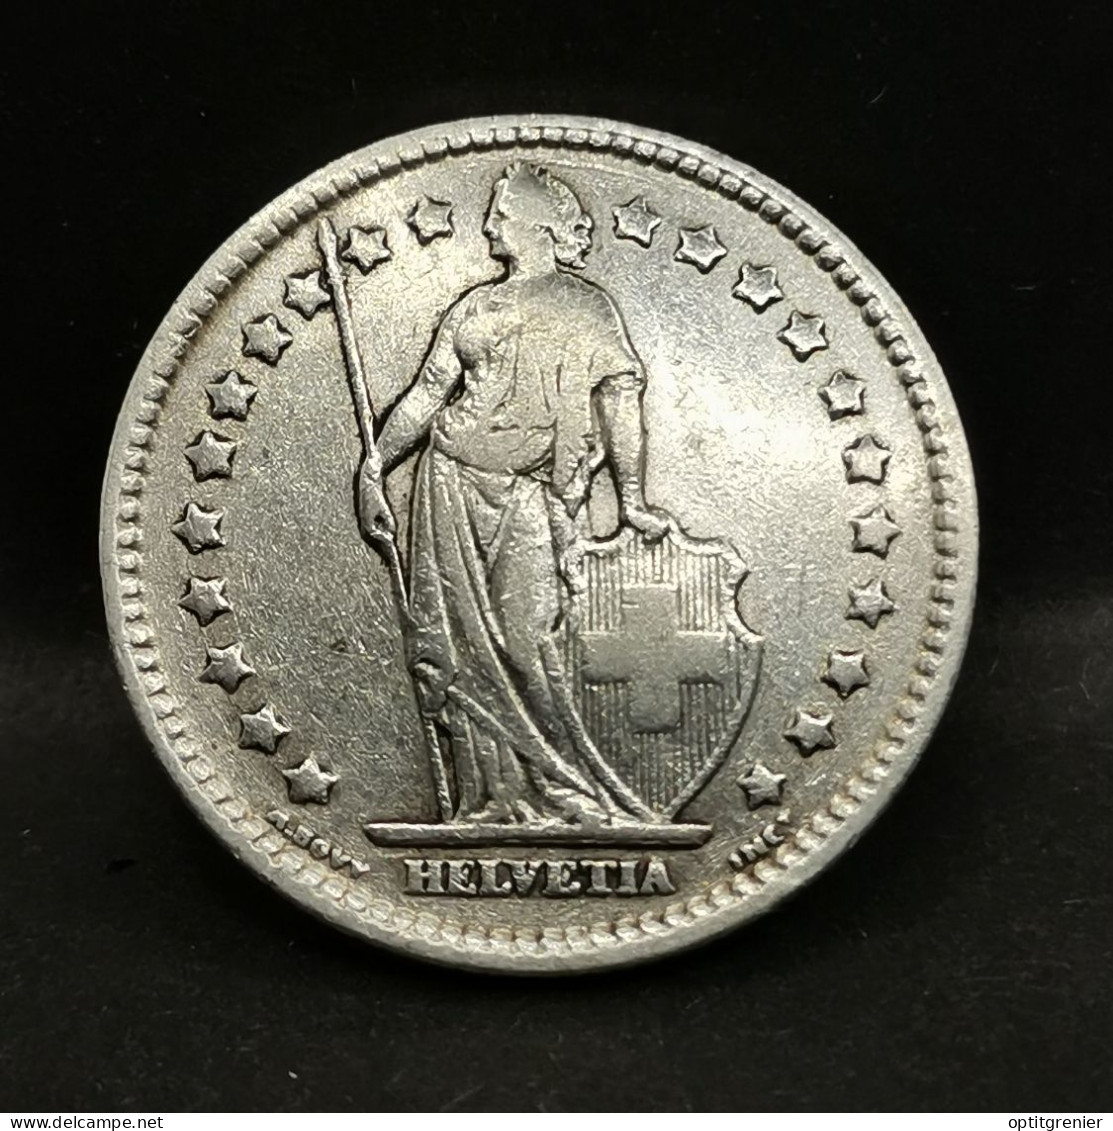 1 FRANC ARGENT 1913 B BERNE HELVETIA DEBOUT SUISSE / SWITZERLAND SILVER - 1 Franken